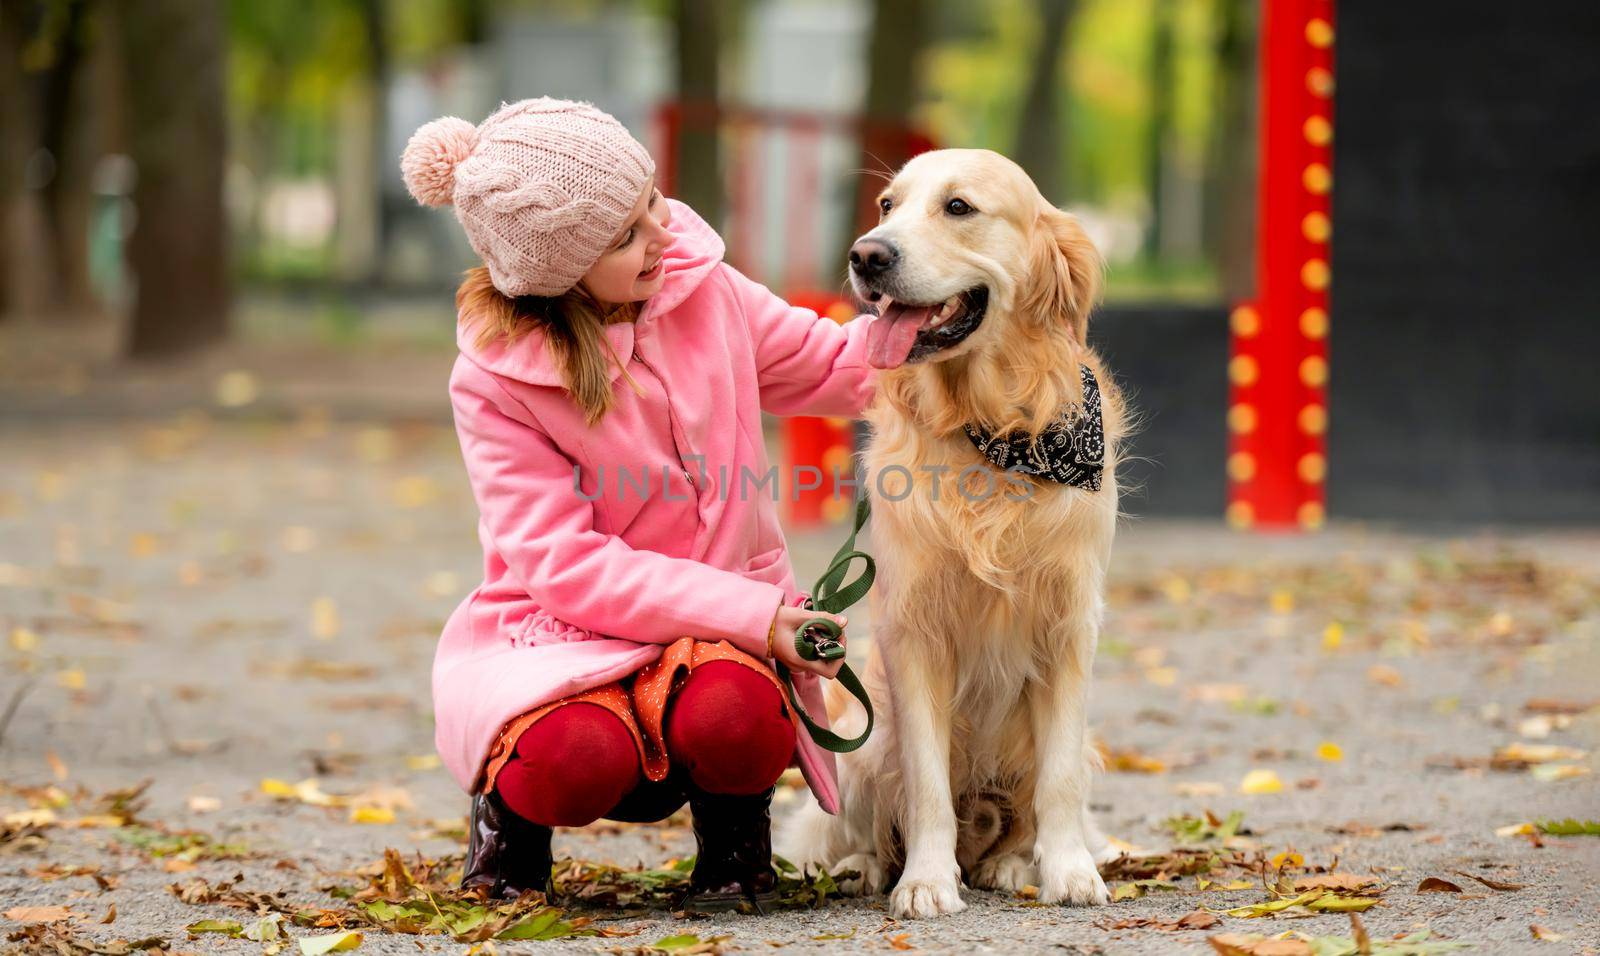 Preteen girl with golden retriever dog by GekaSkr